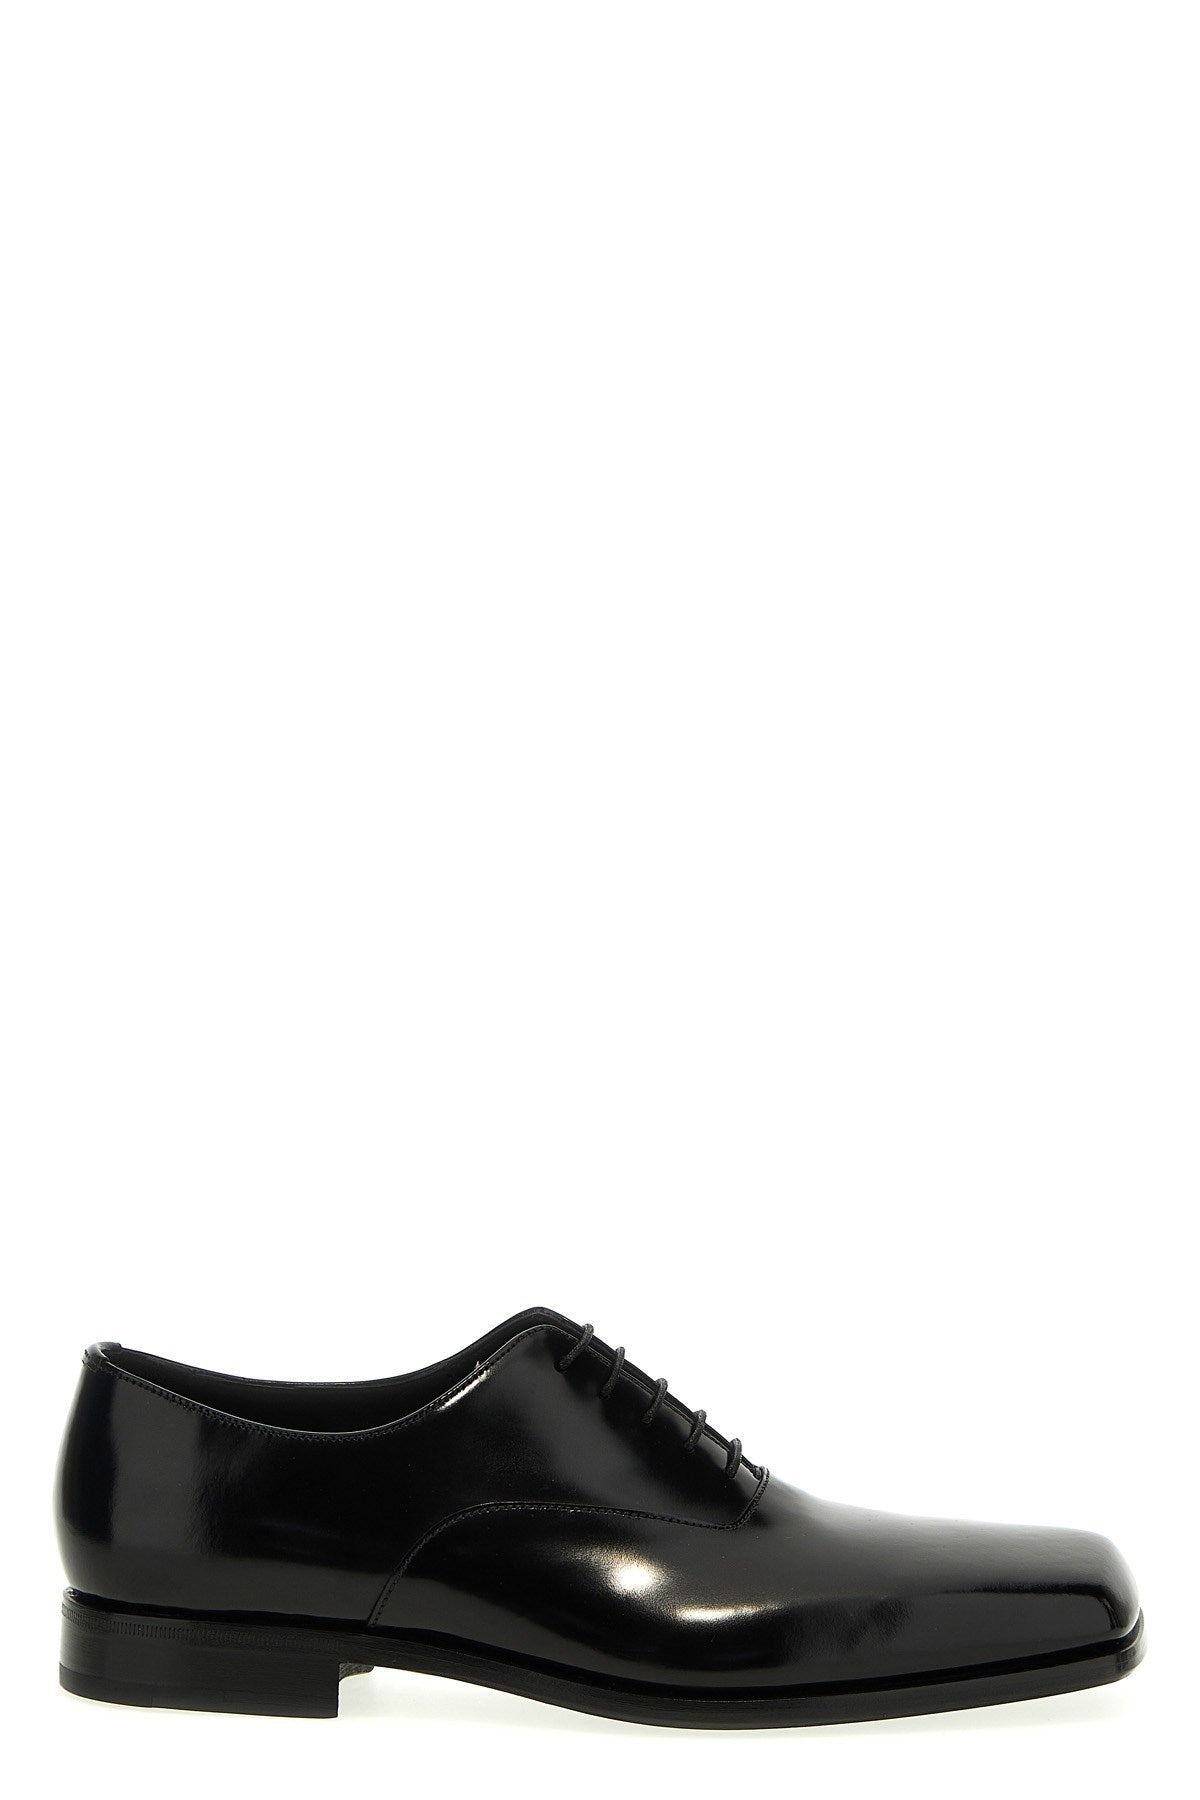 Prada Men 'Oxford' Lace Up Shoes - 1